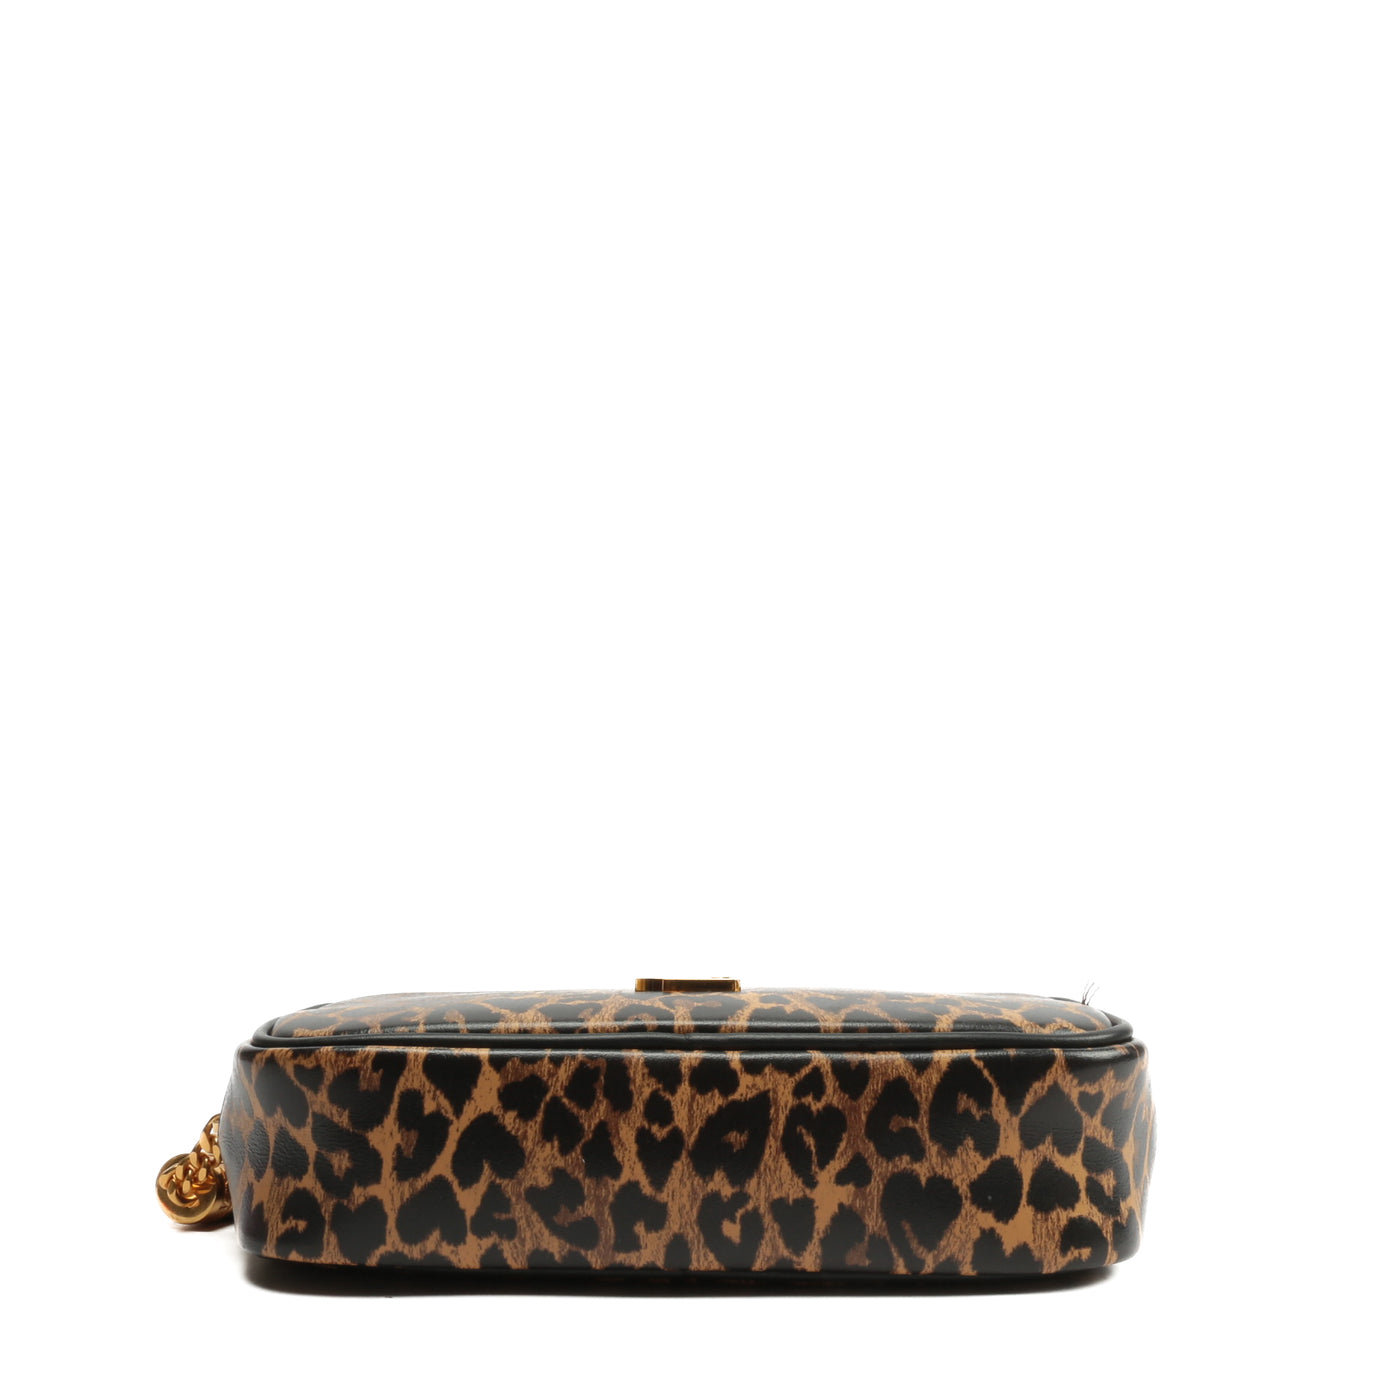 SAINT LAURENT Mini Leopard Lou Camera Bag